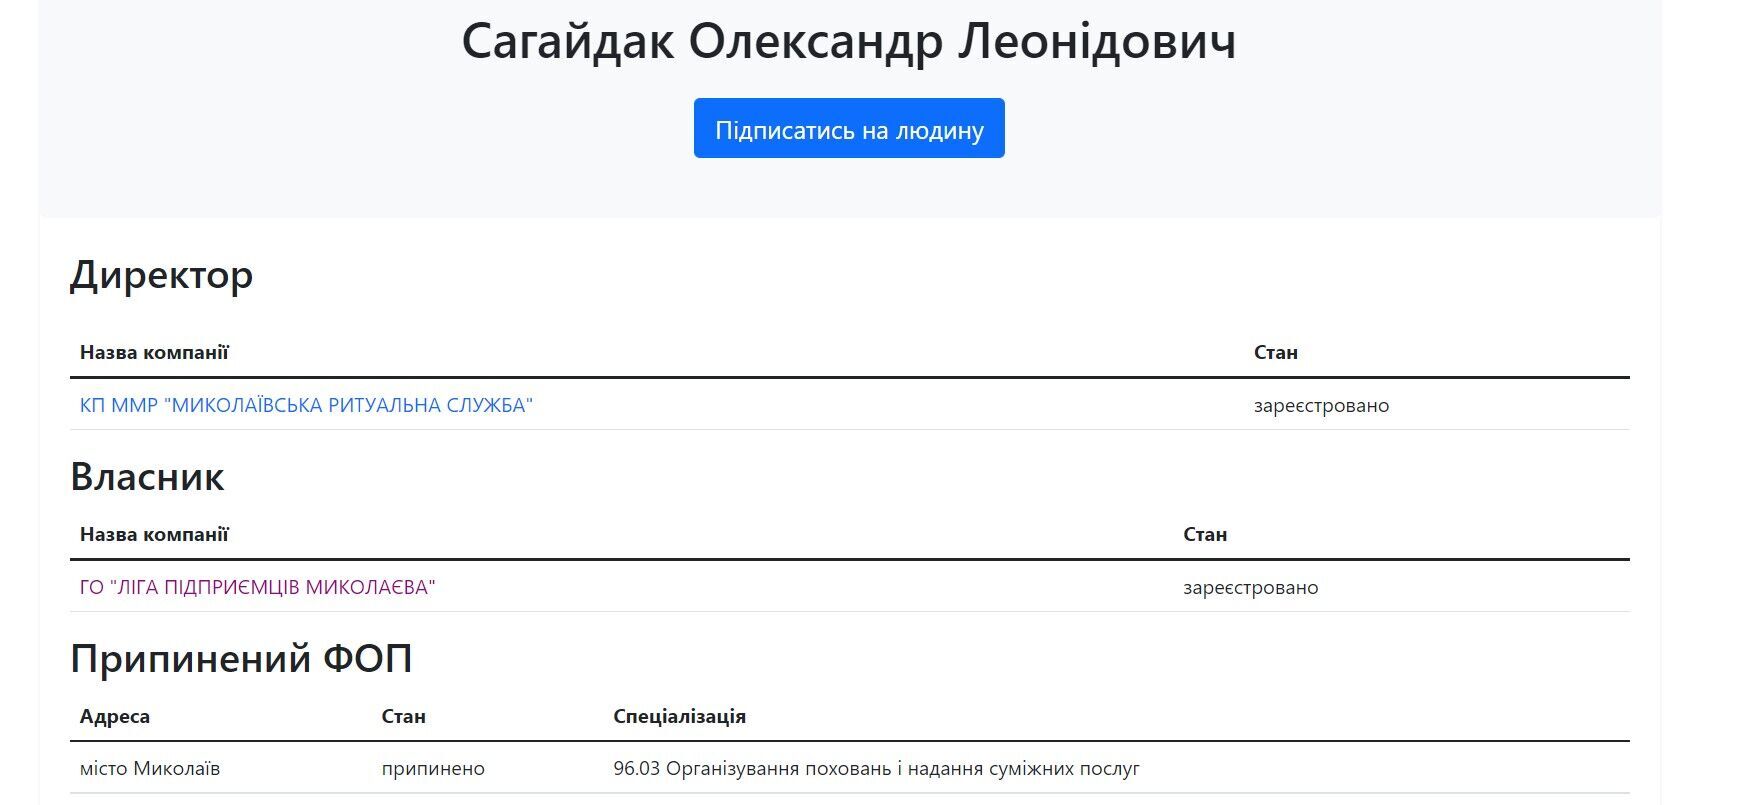 opendatabot – данные о Сергее Сагайдаке из Николаева